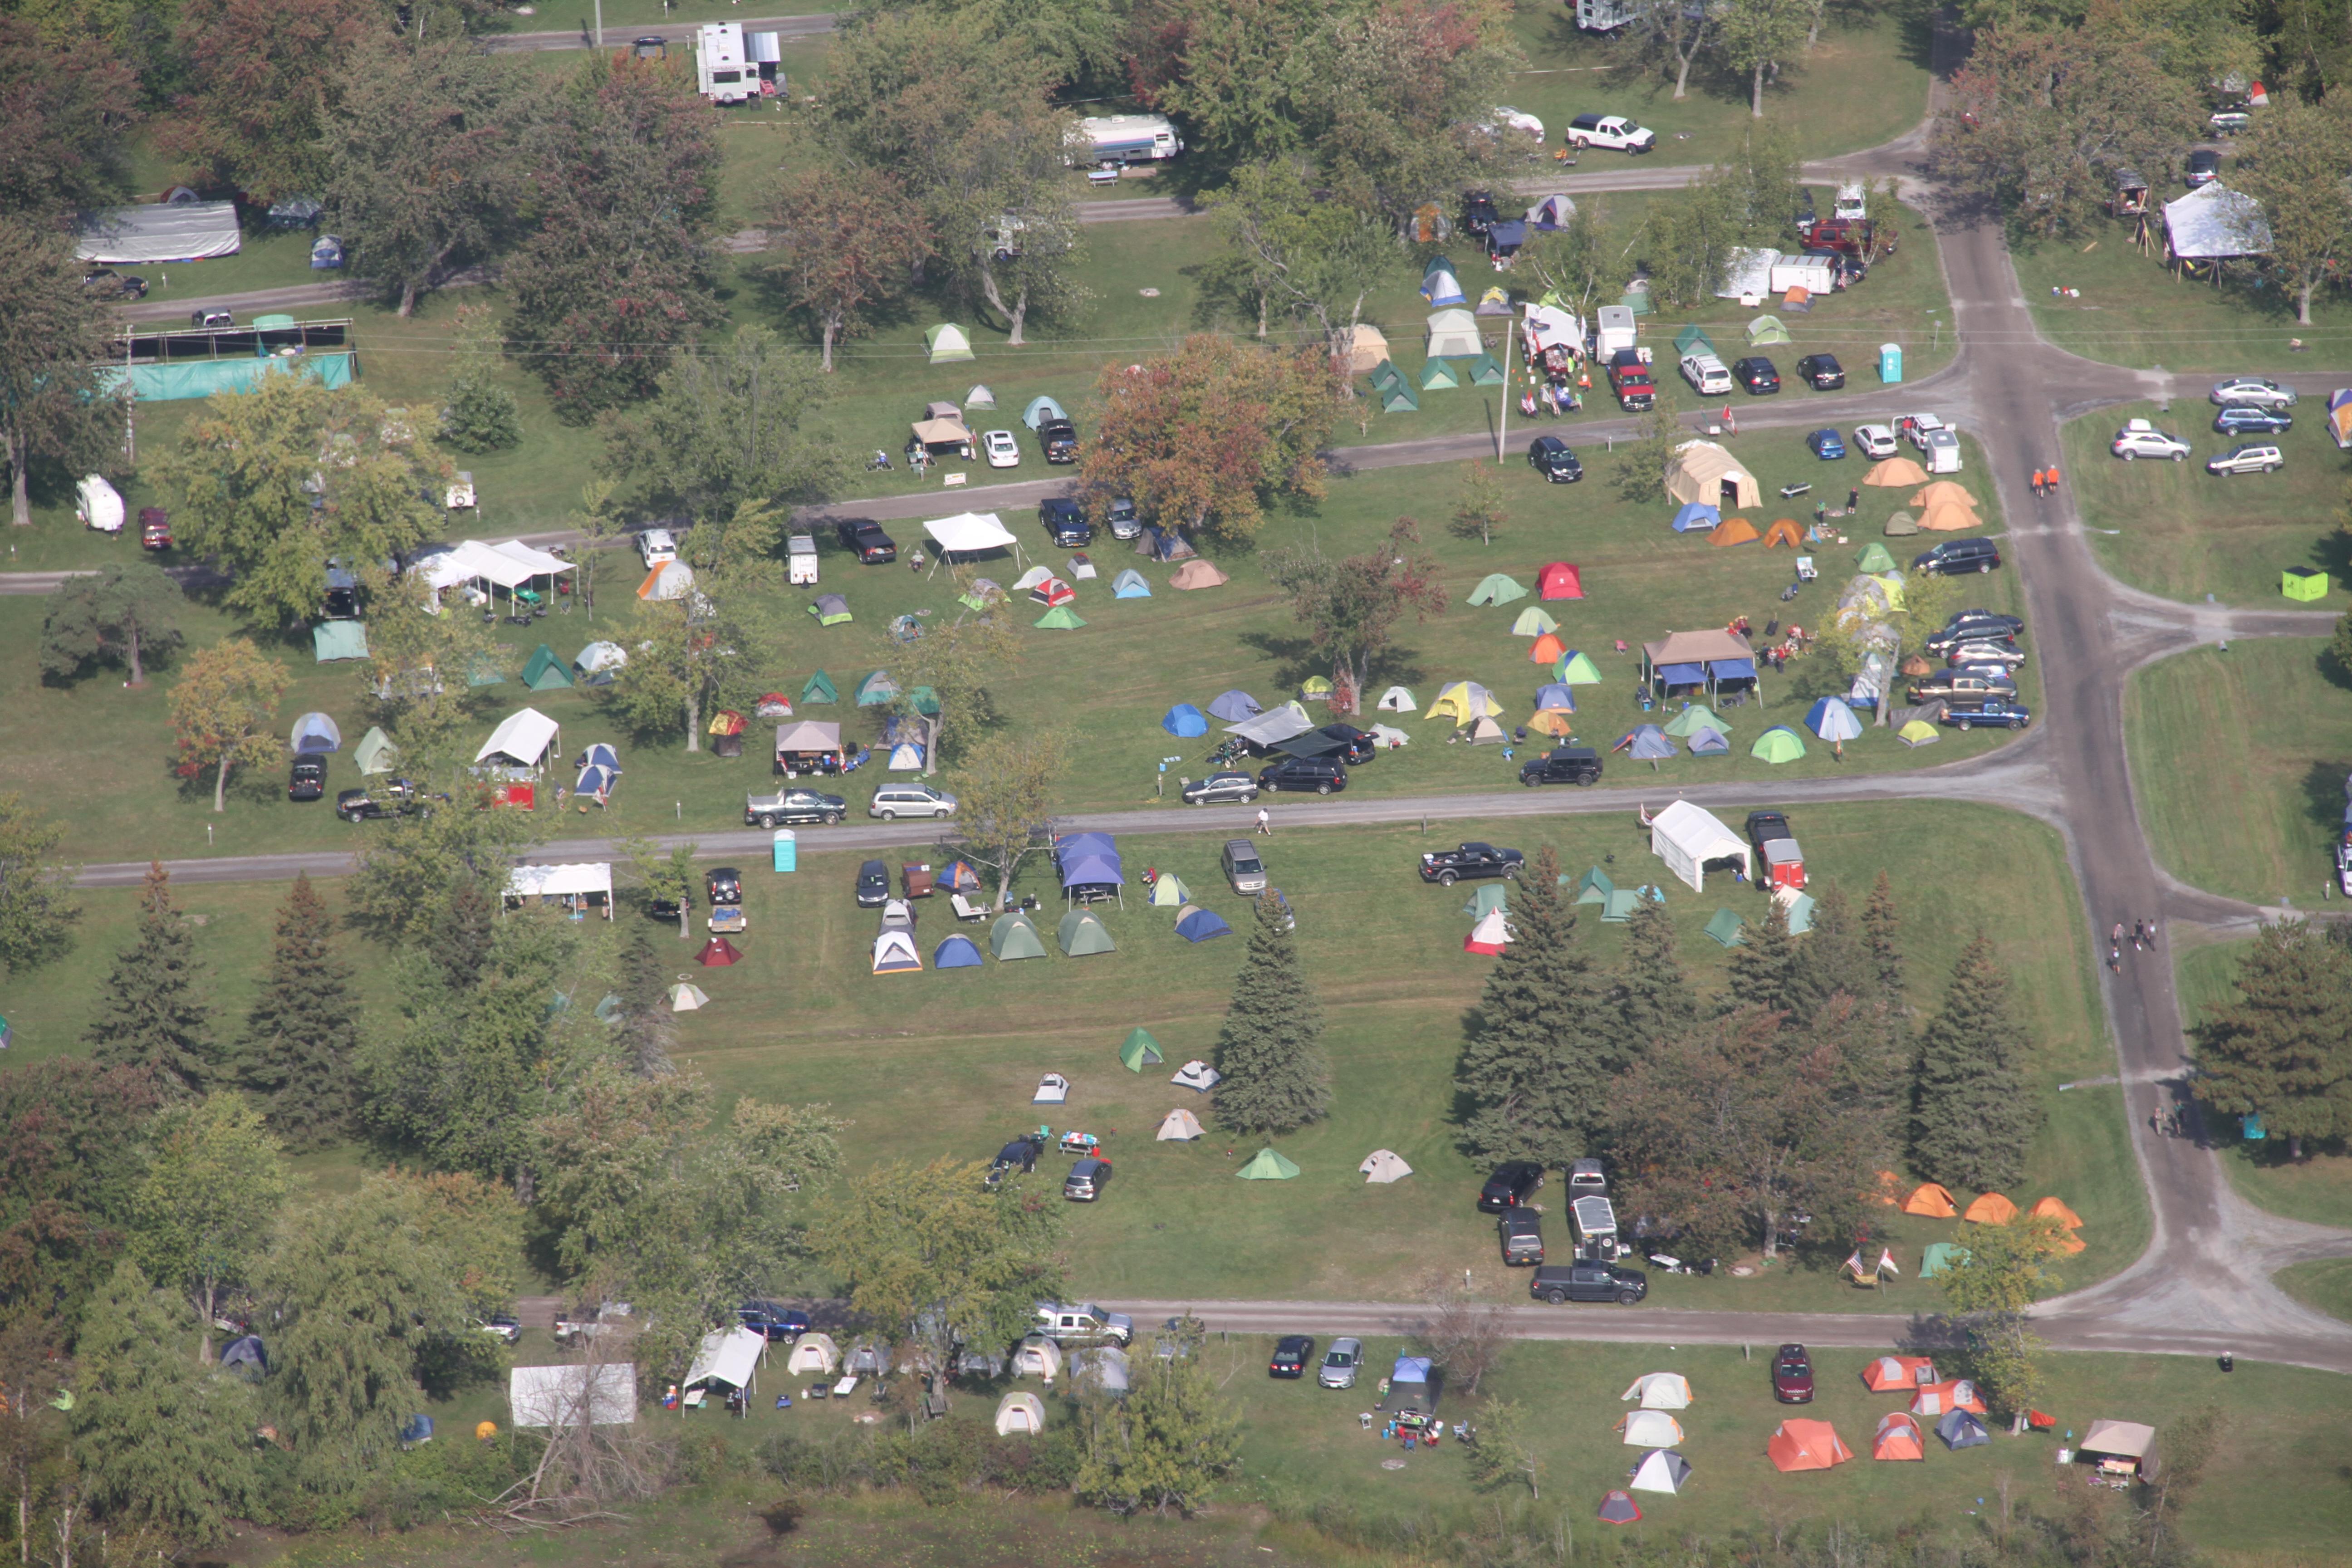 Brotherhood campsite, Morrisburg